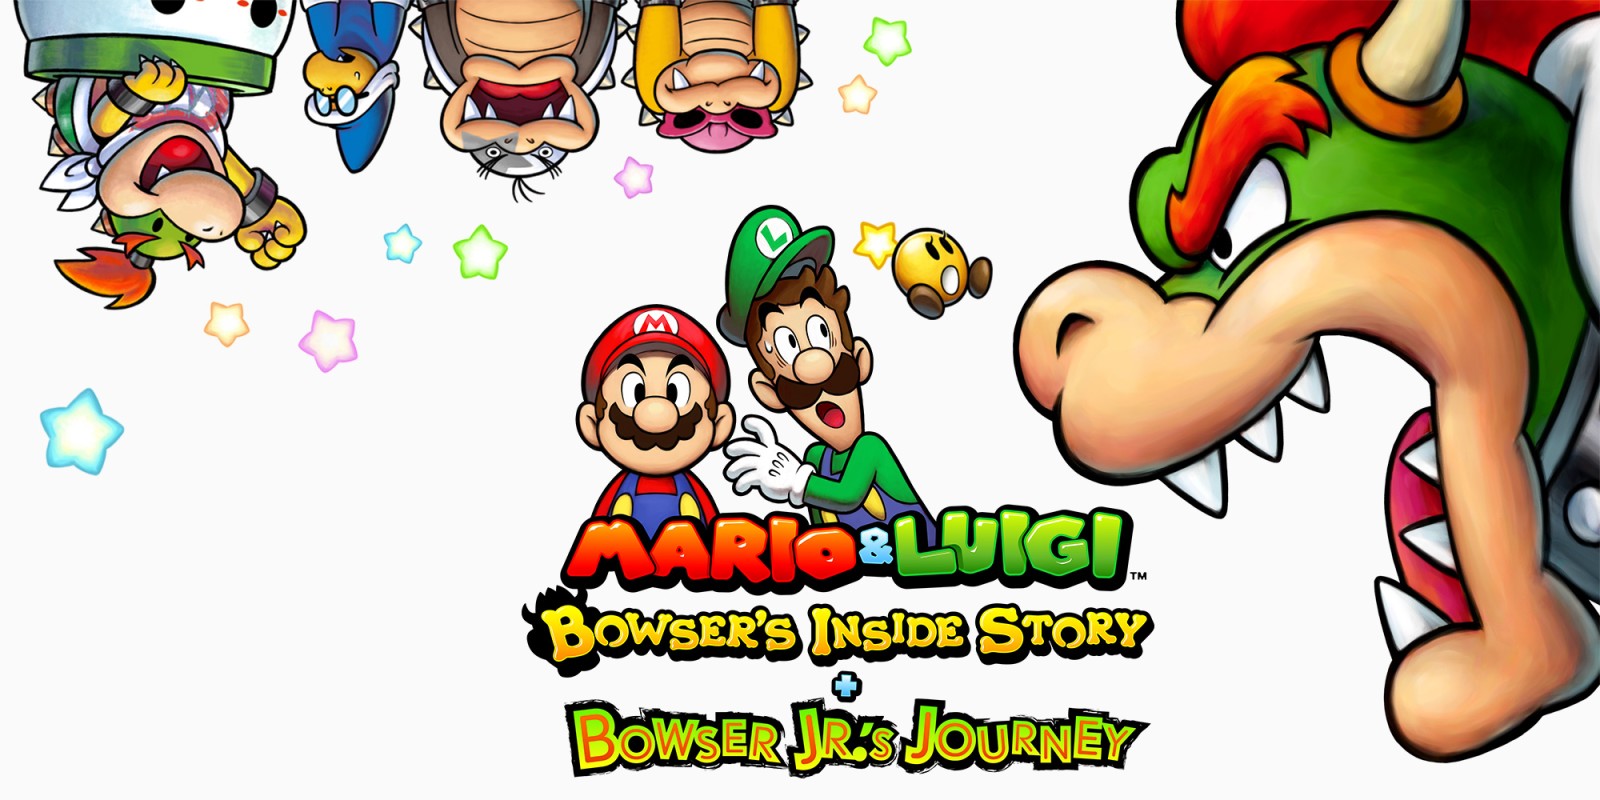 Mario luigi bowsers.